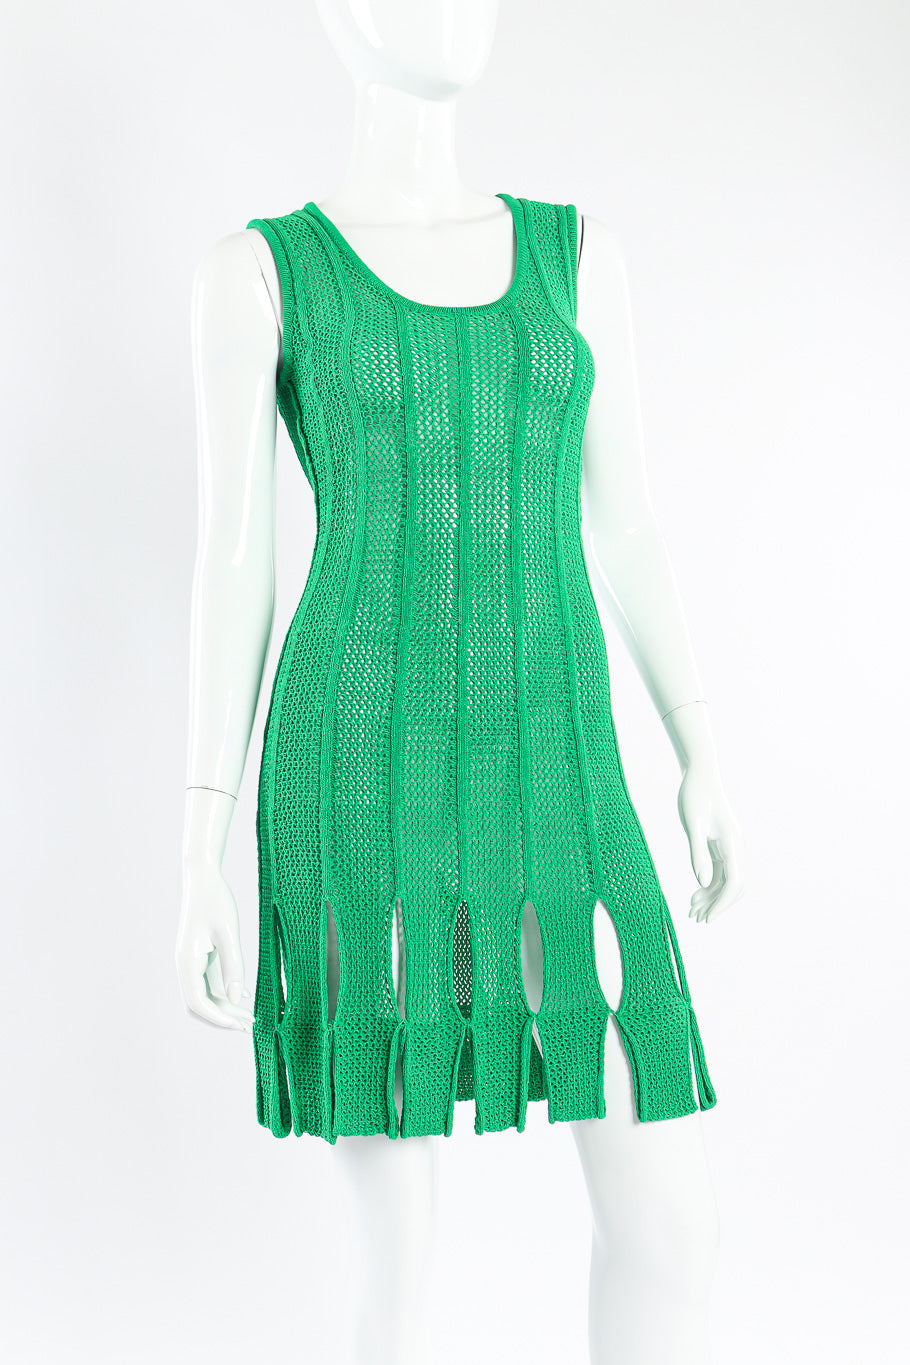 Mesh dress by Bottega Veneta on mannequin front close @recessla